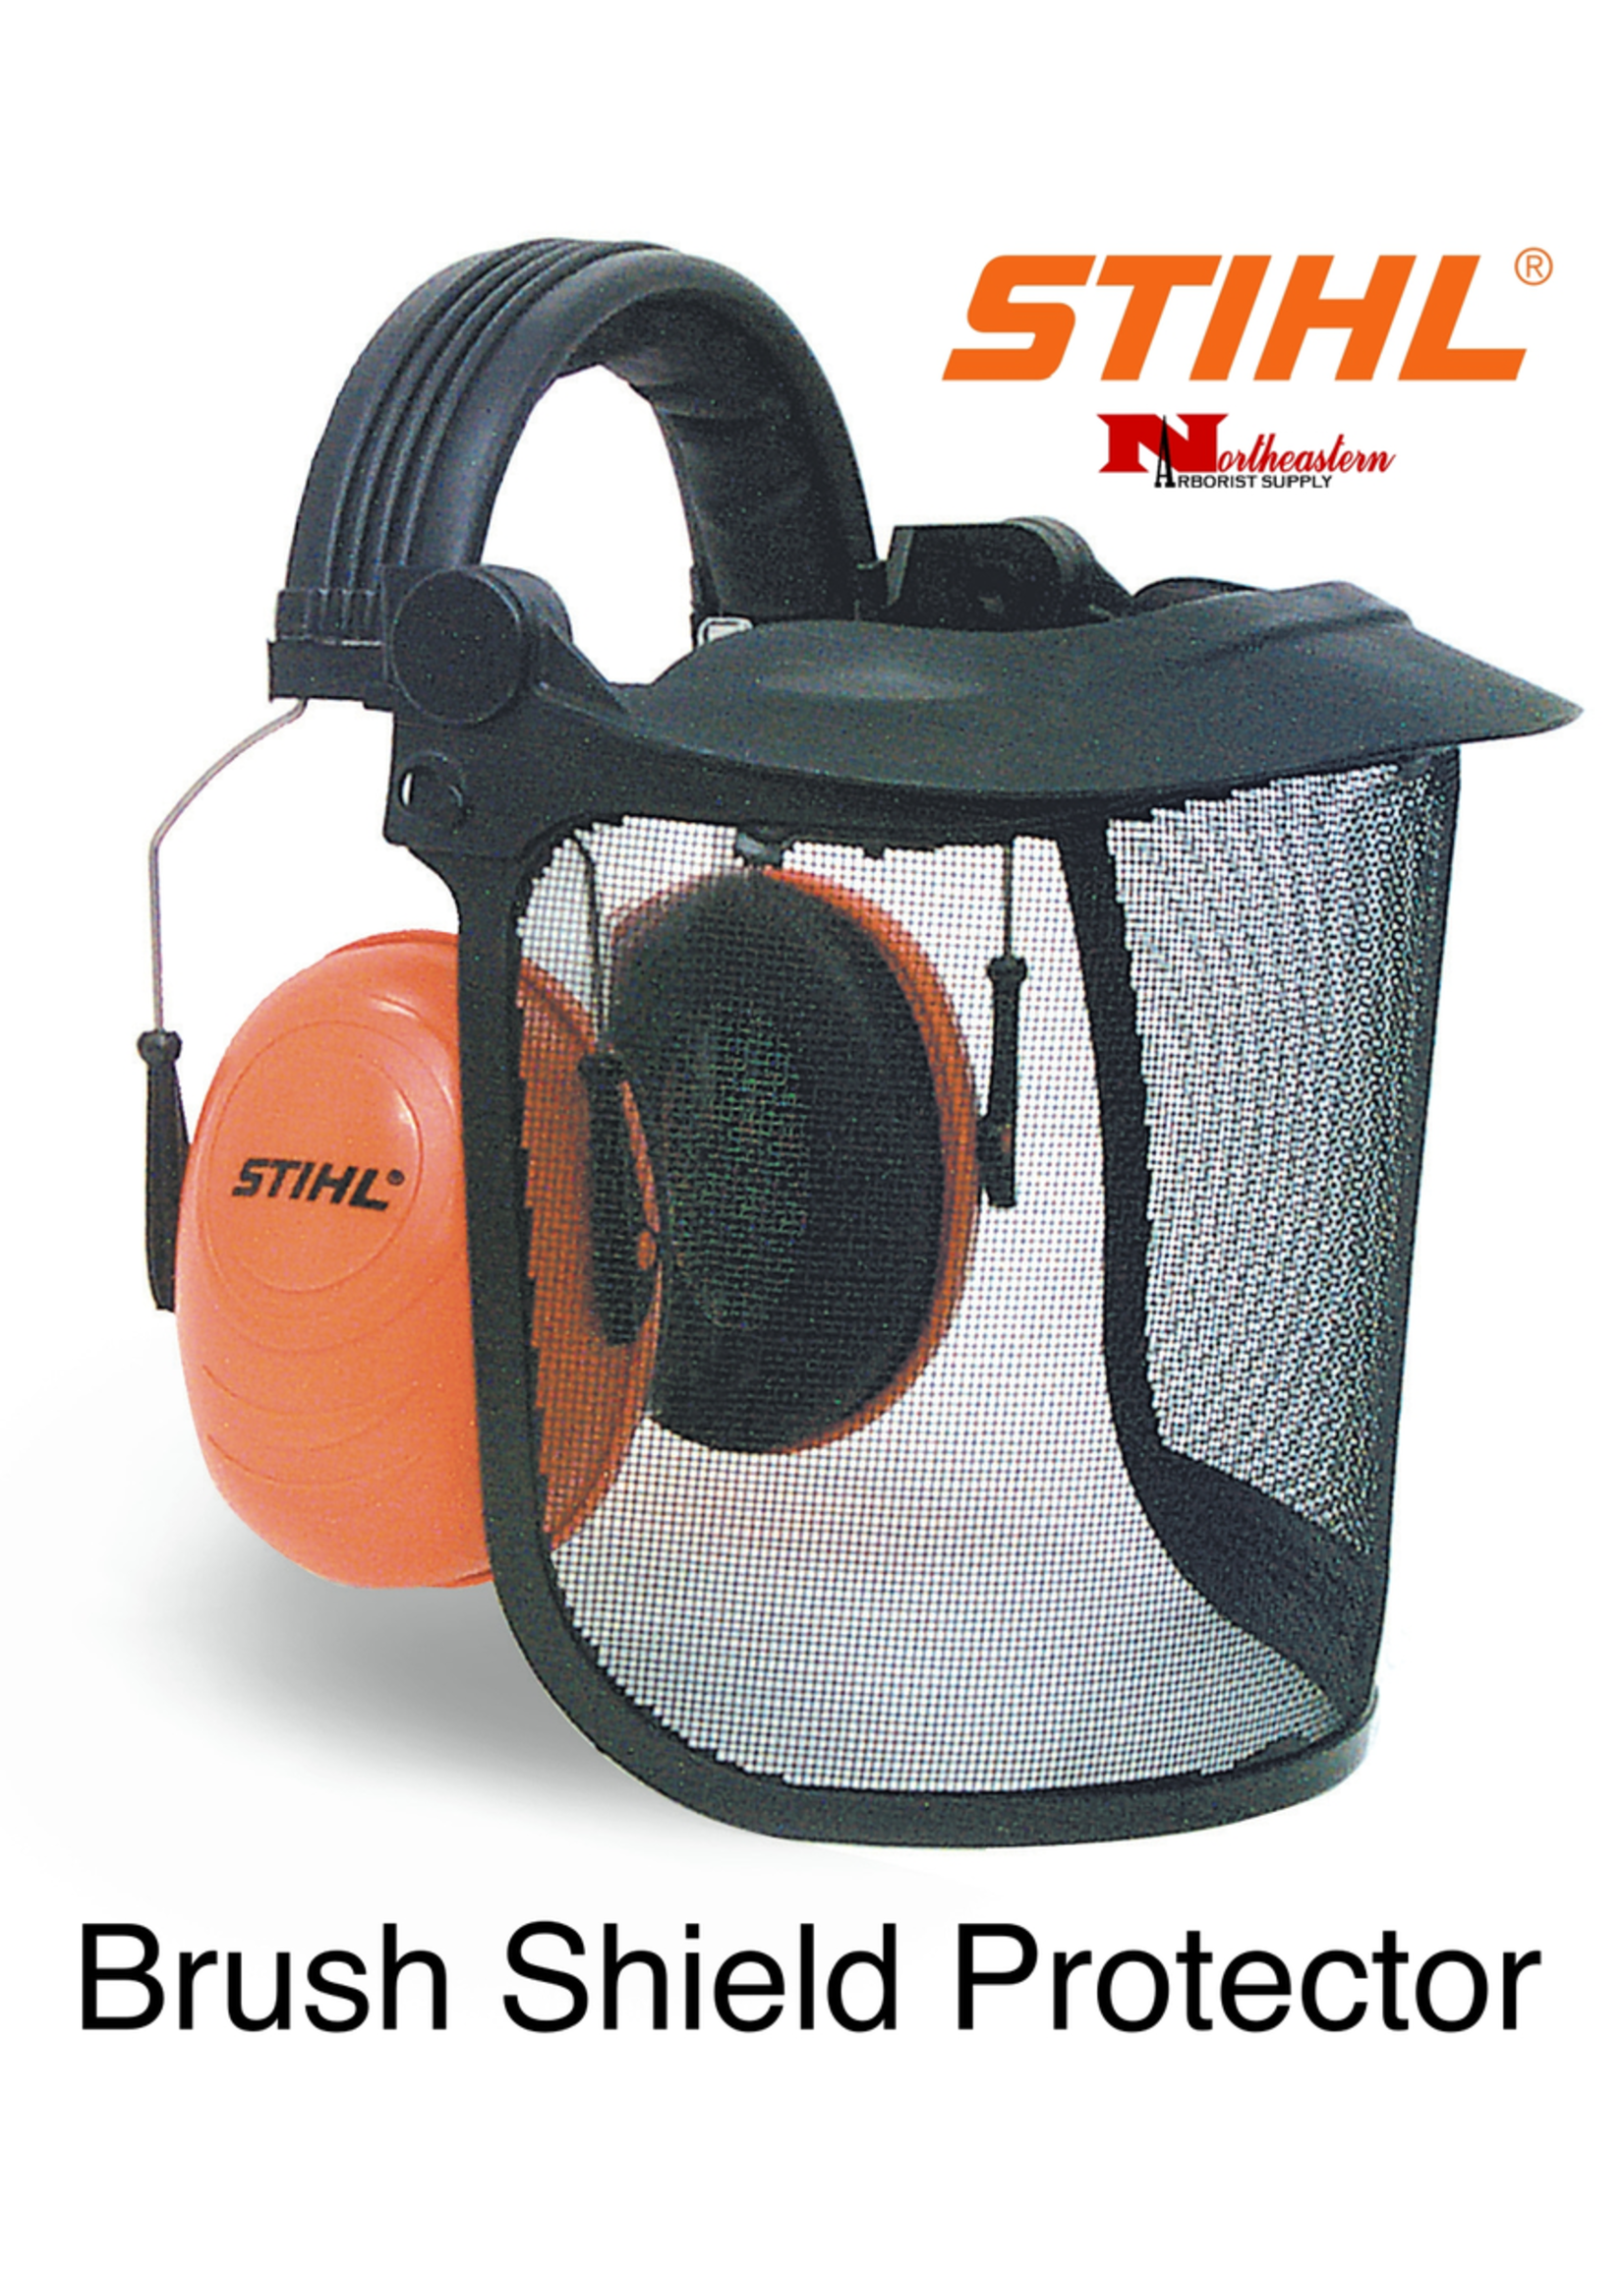 STIHL® Stihl Brush Shield Protector